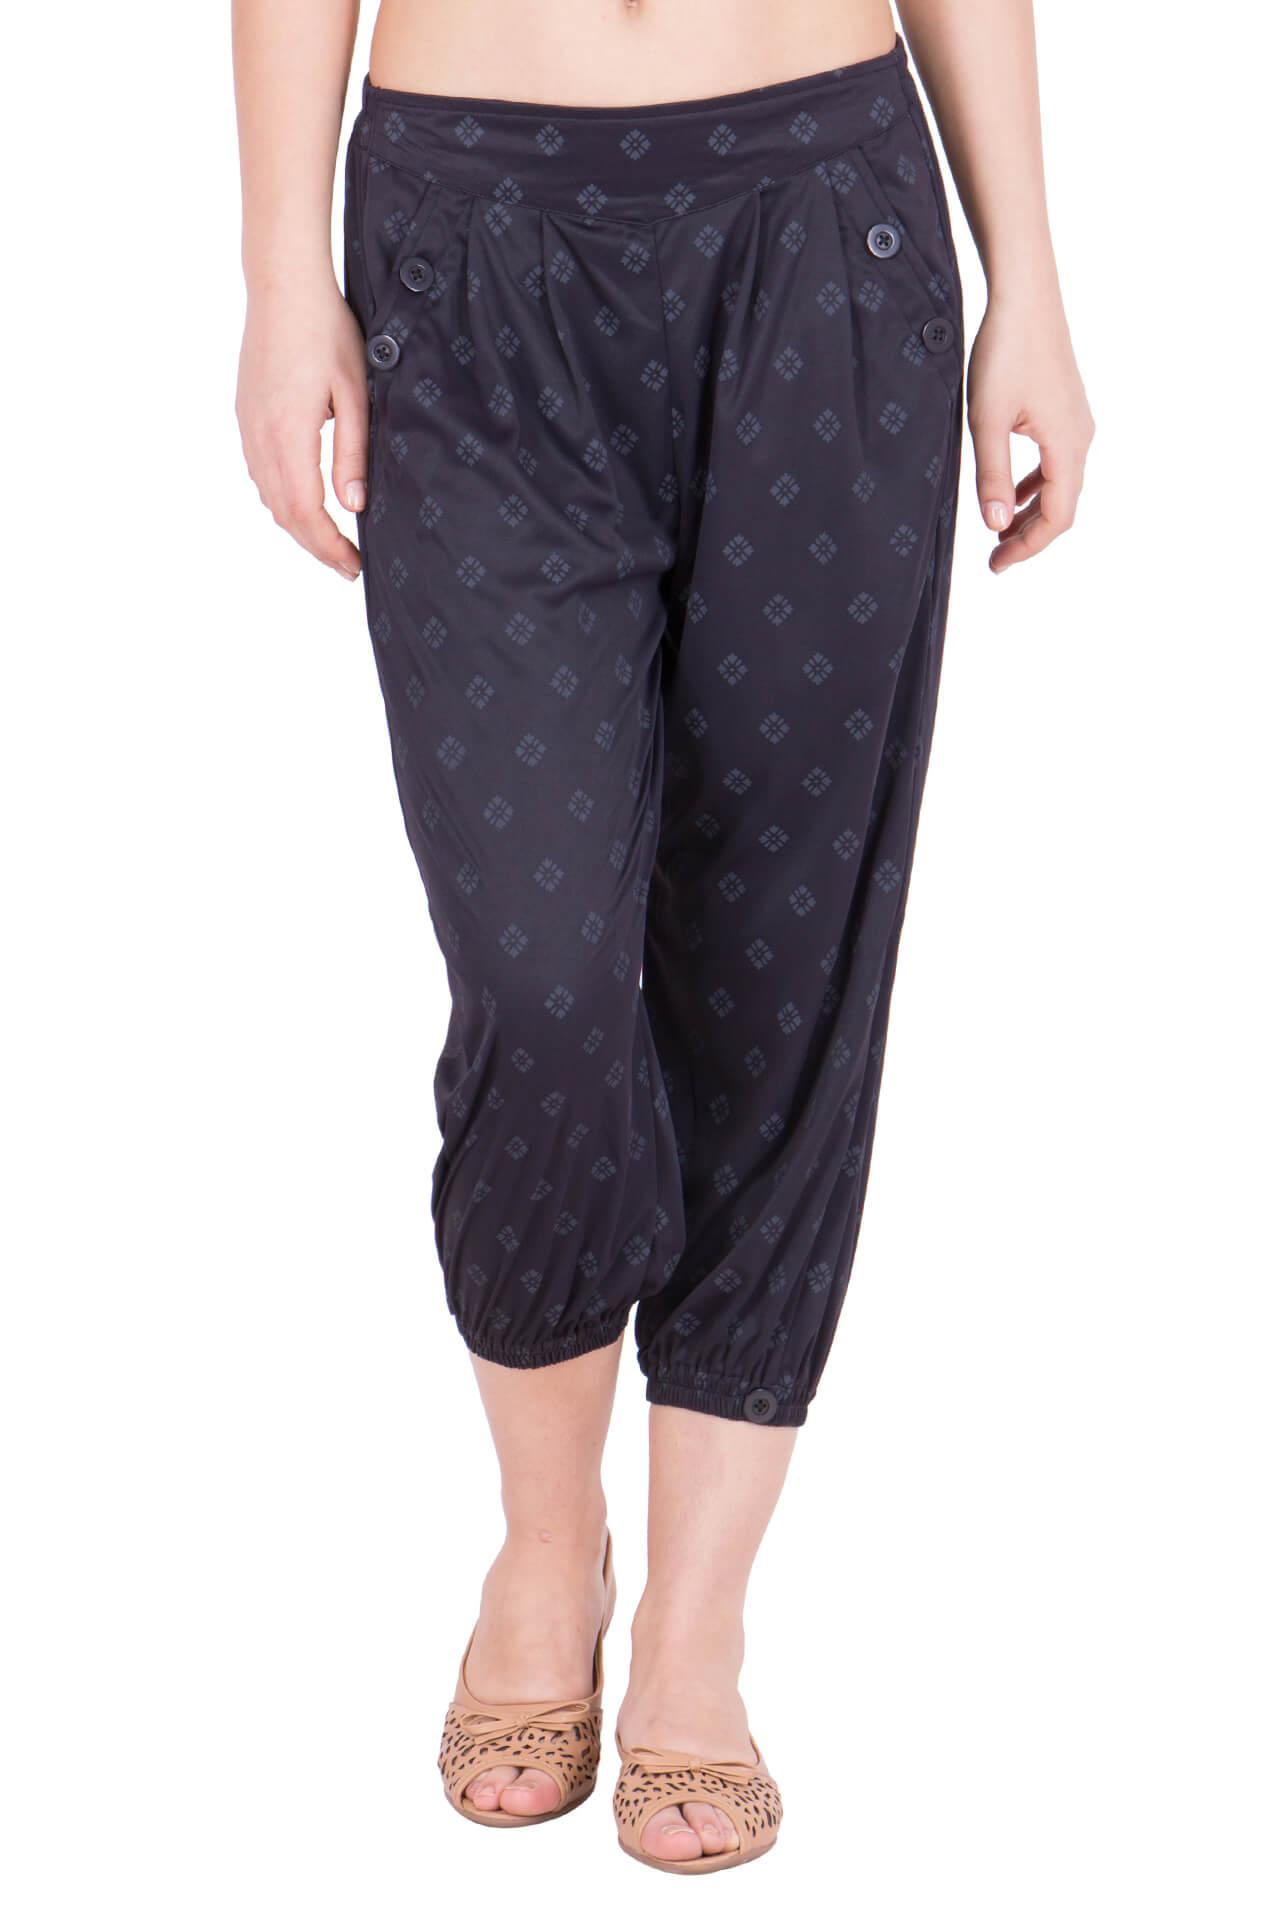 Black Capri Pants for Girls & Women – Zubix : Clothing